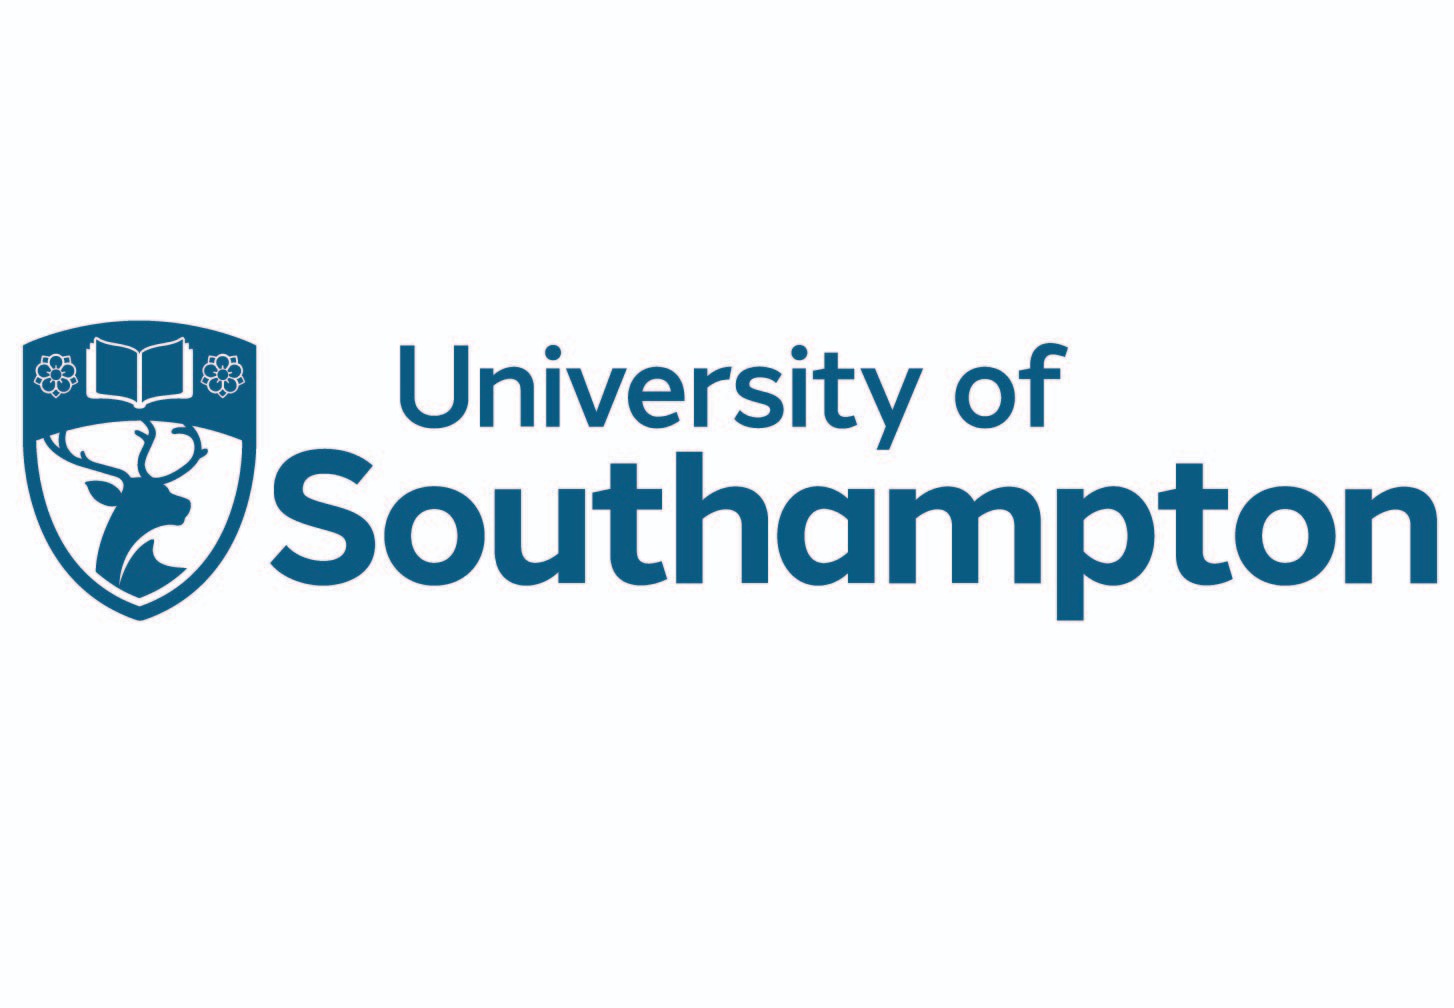 university-of-southampton